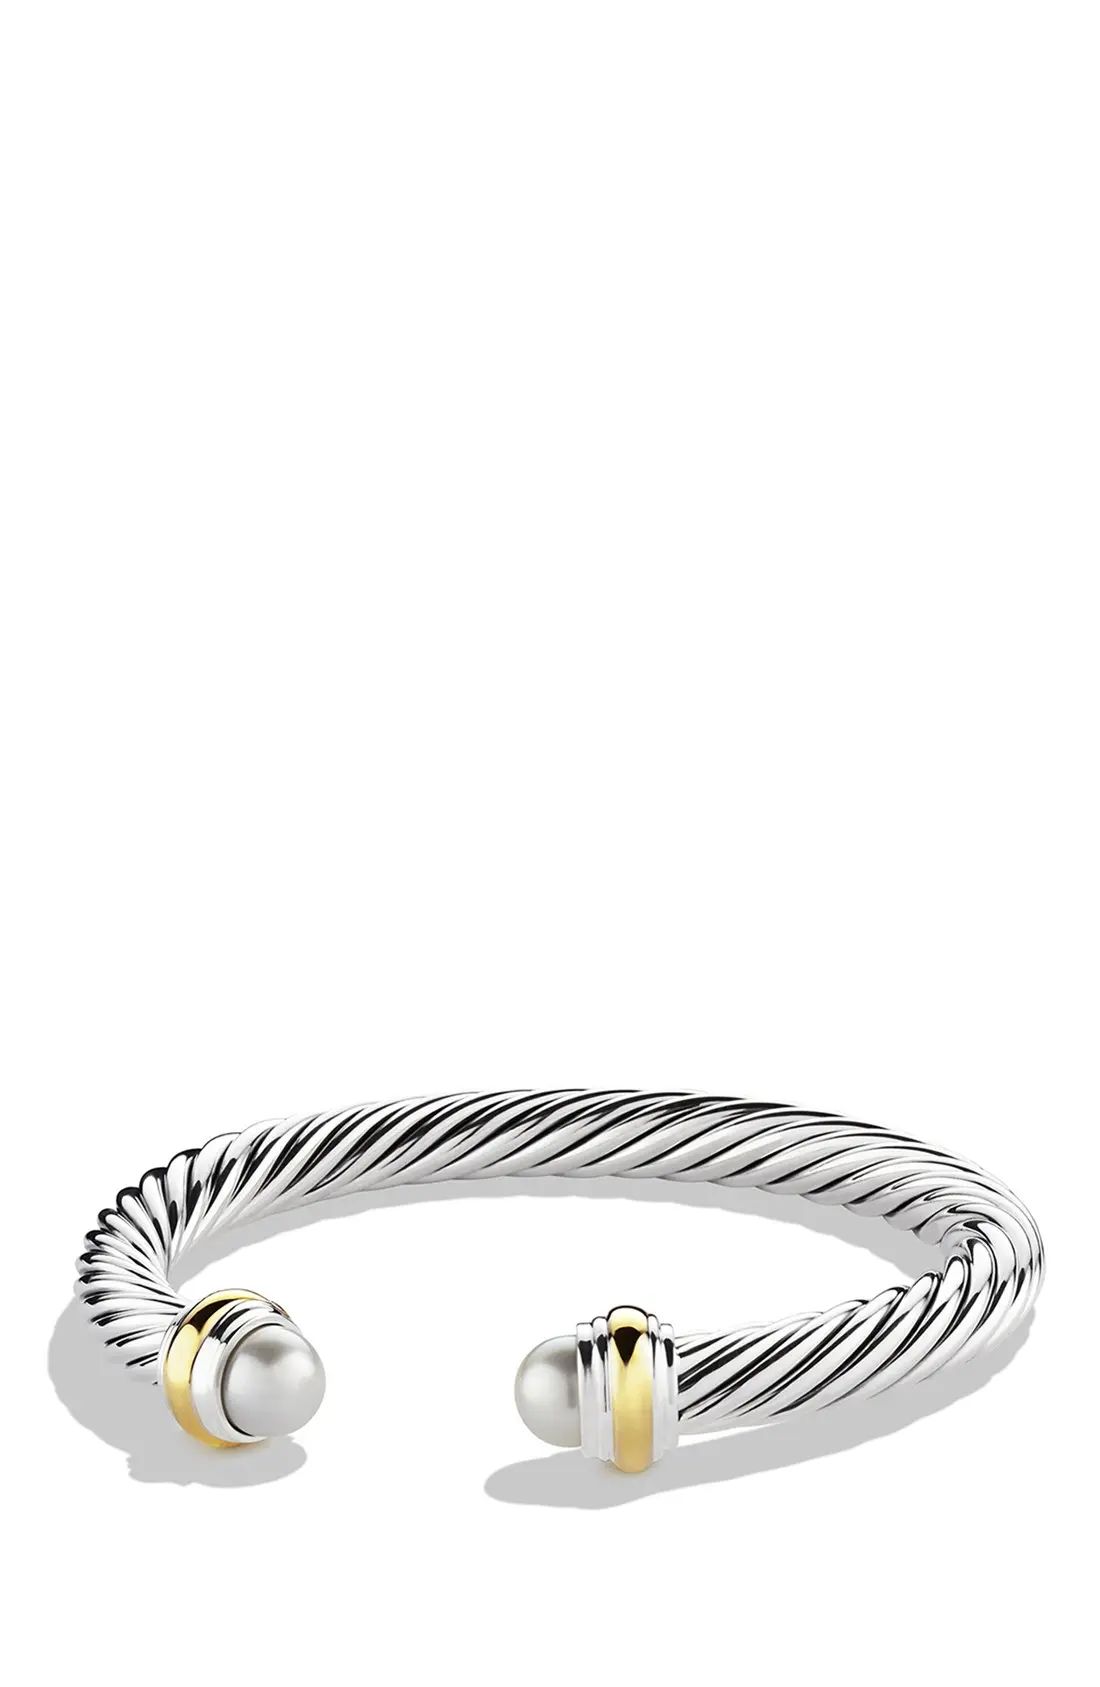 Women's David Yurman Cable Classics Bracelet With Semiprecious Stones & 14K Gold, 7Mm | Nordstrom